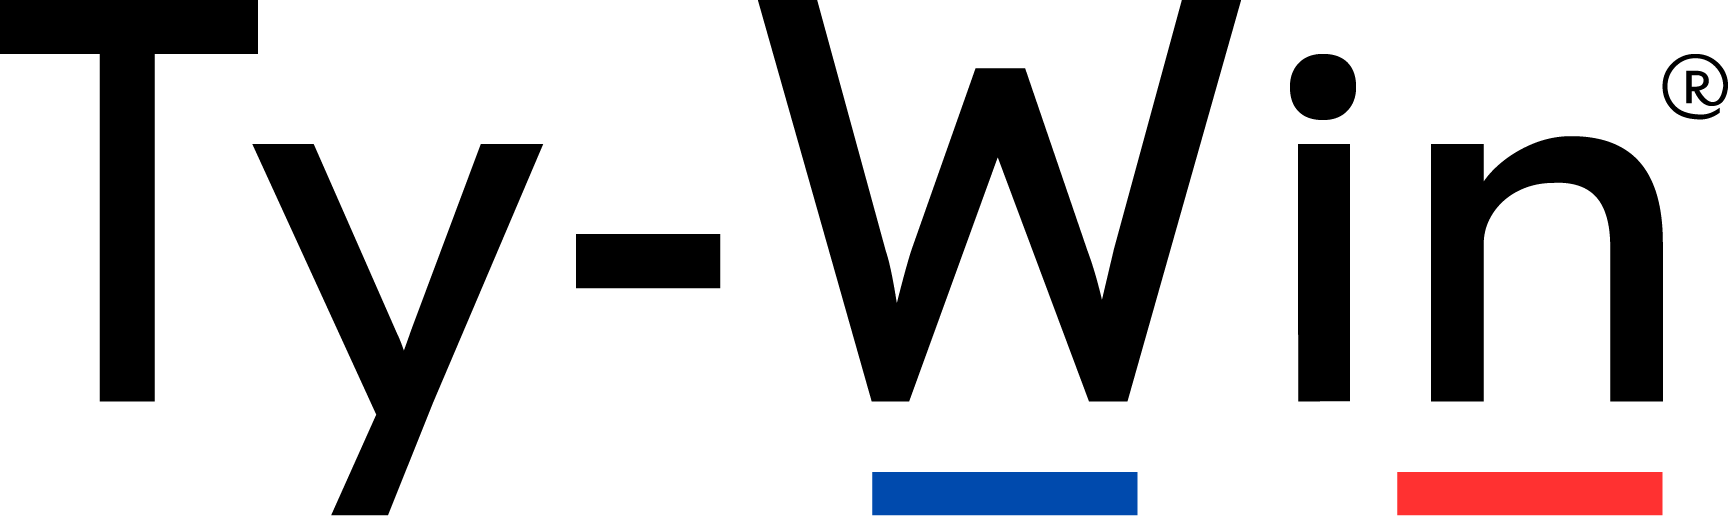 Logo Ty-Win FR - Noir